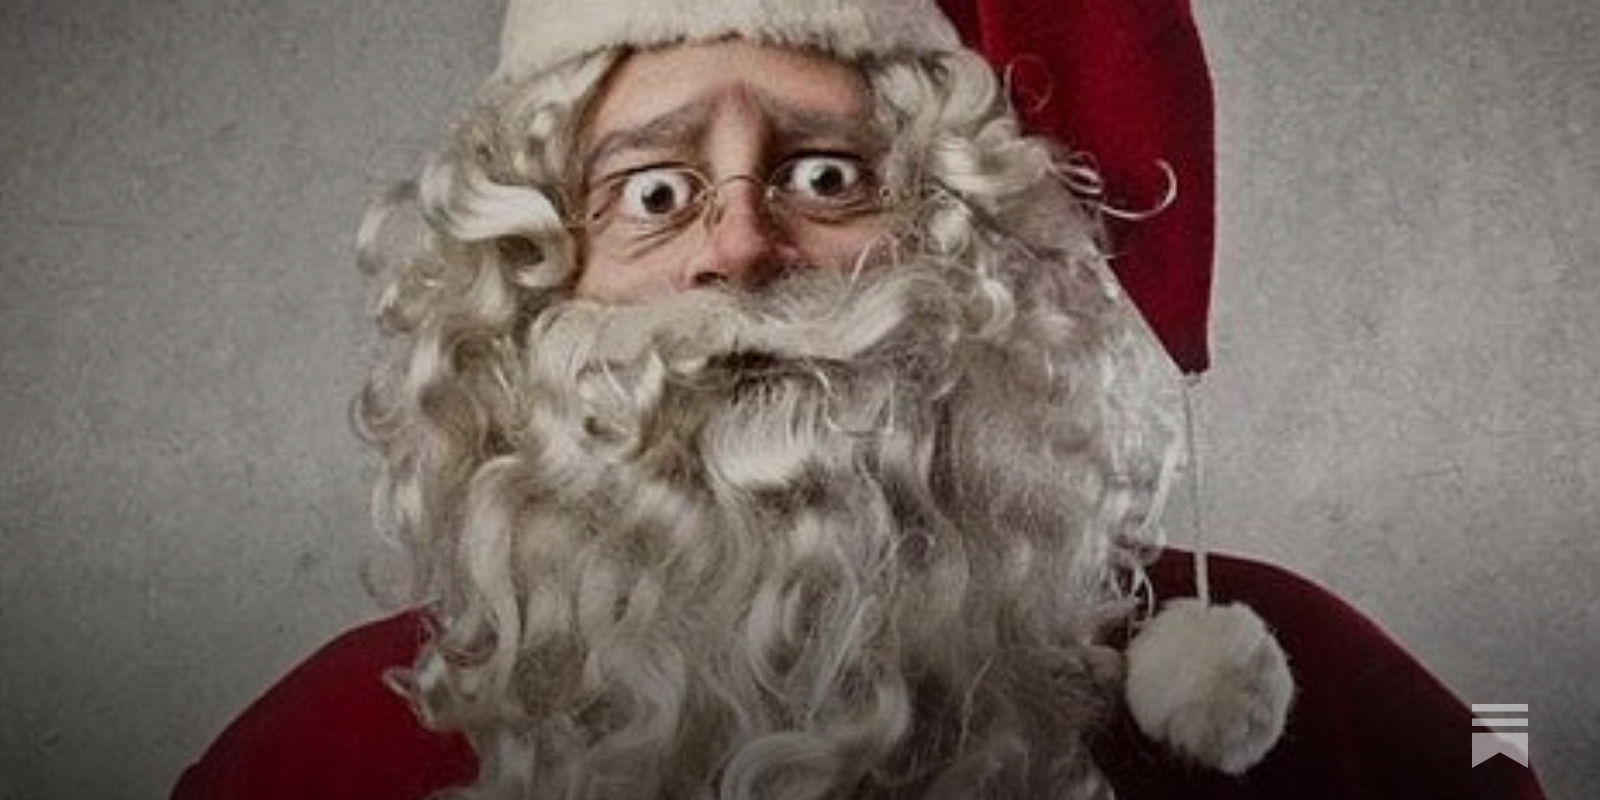 Santa’s naughty and nice list hacked in massive data breach